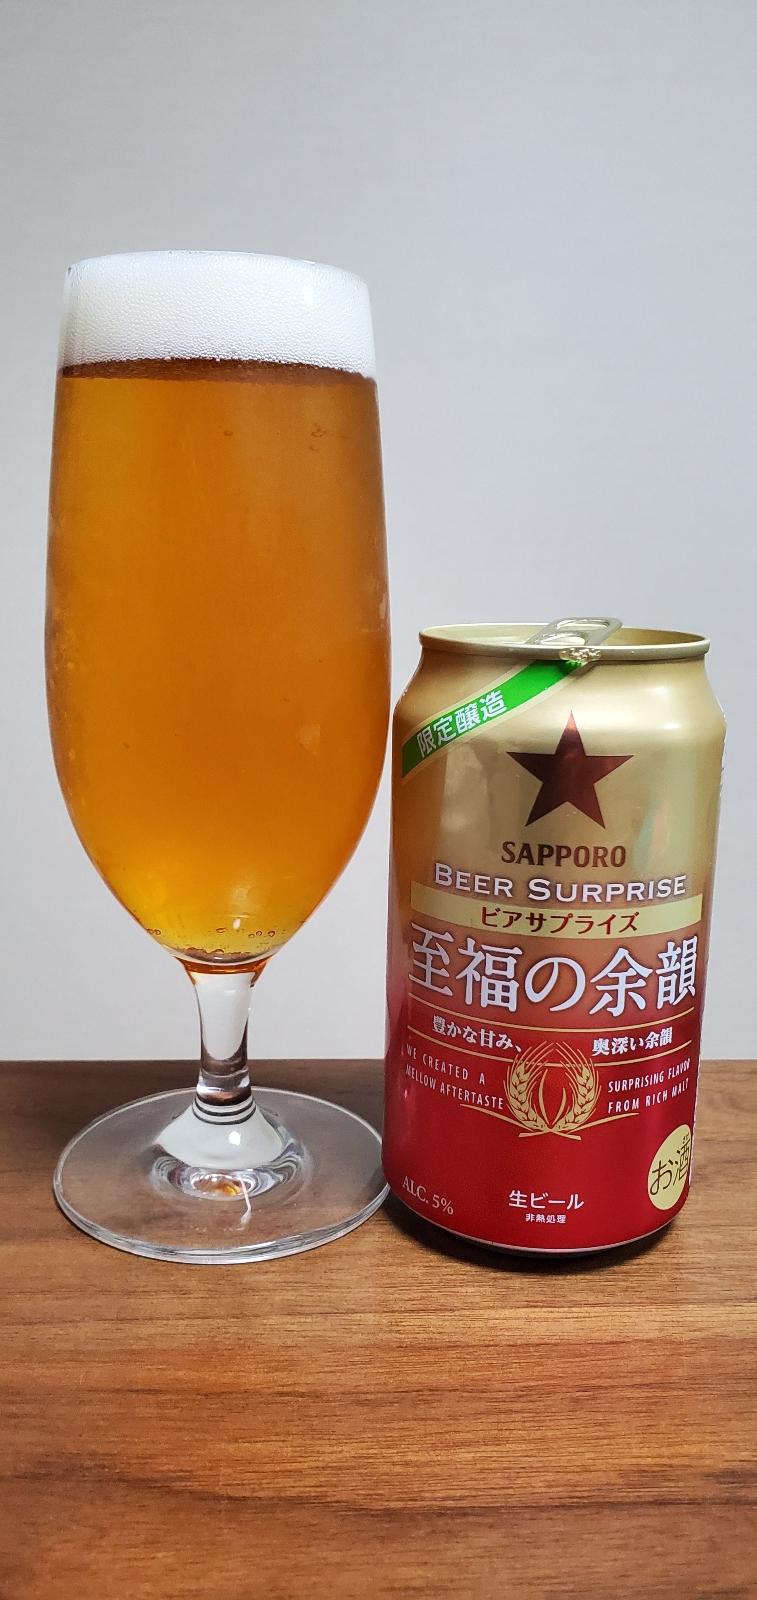 Beer Surprise: Shifuku no Yoin